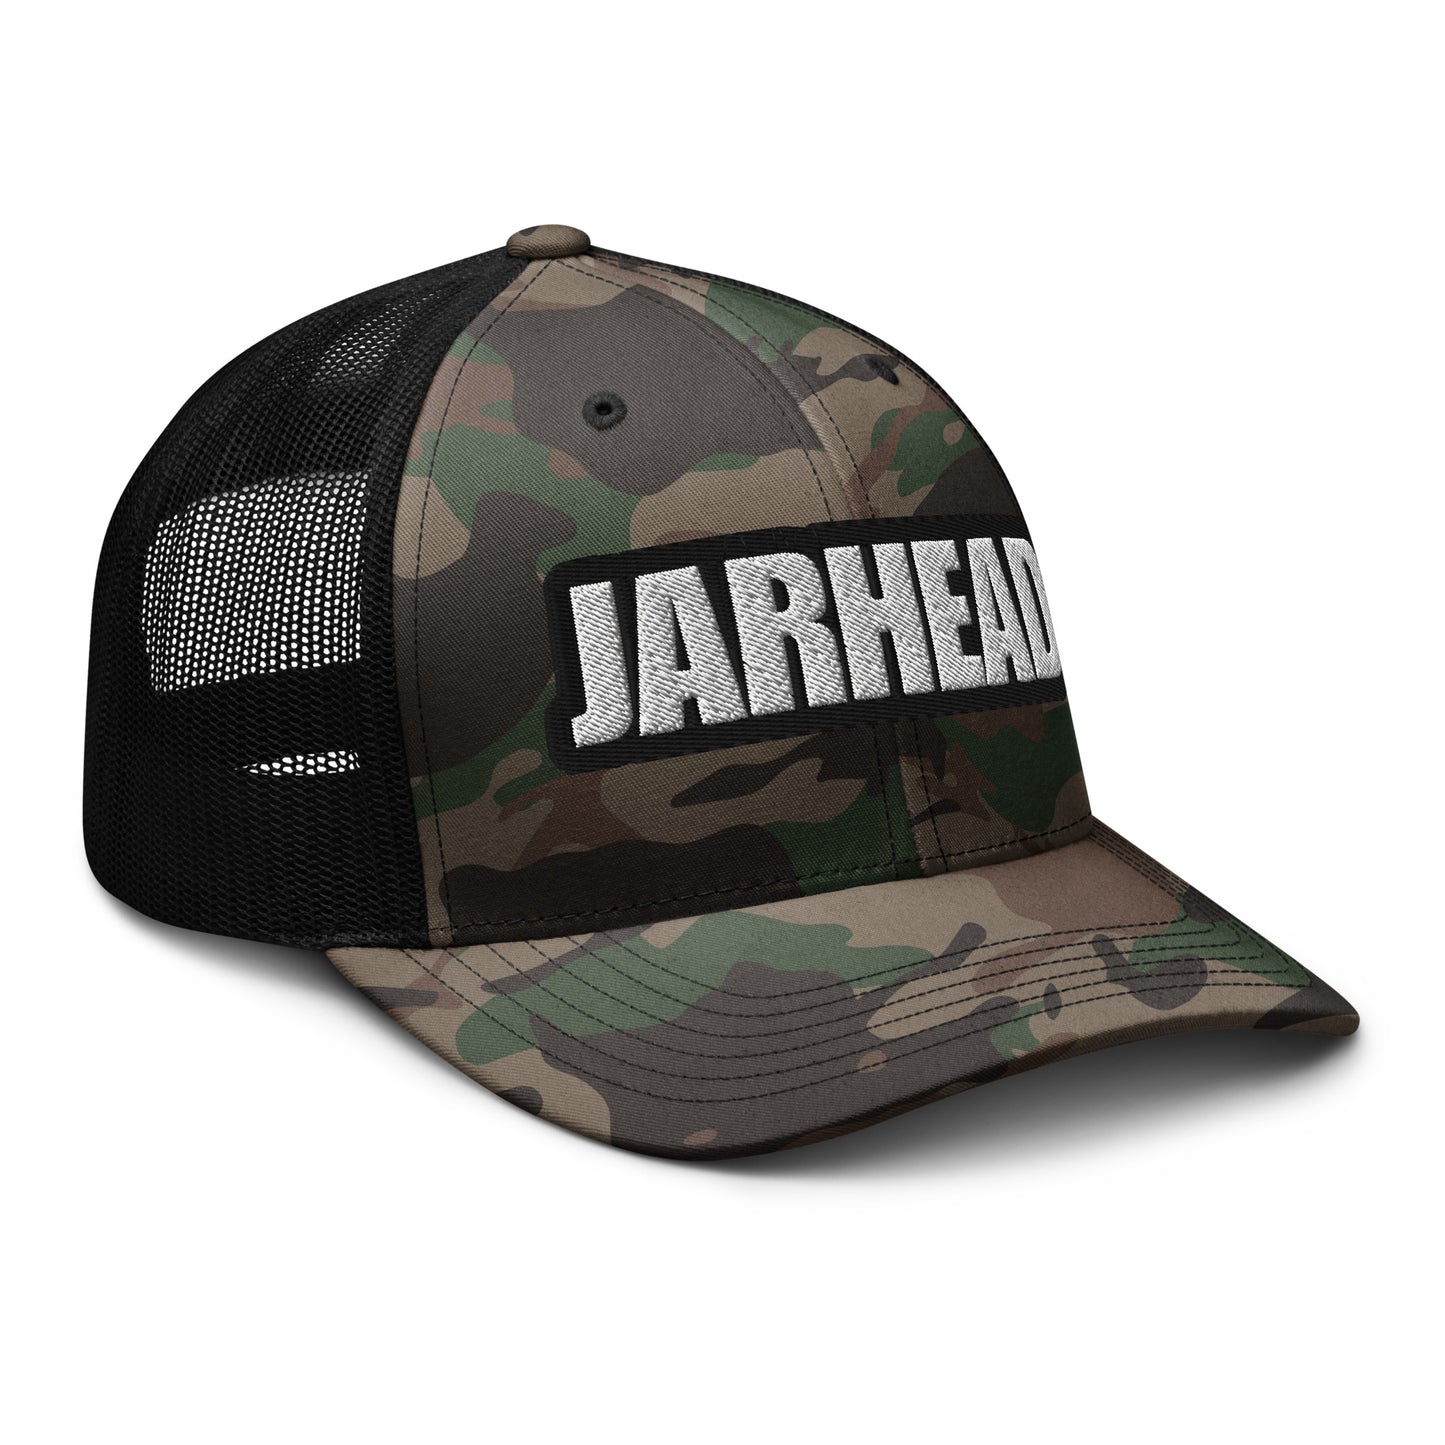 JARHEAD Camouflage trucker hat